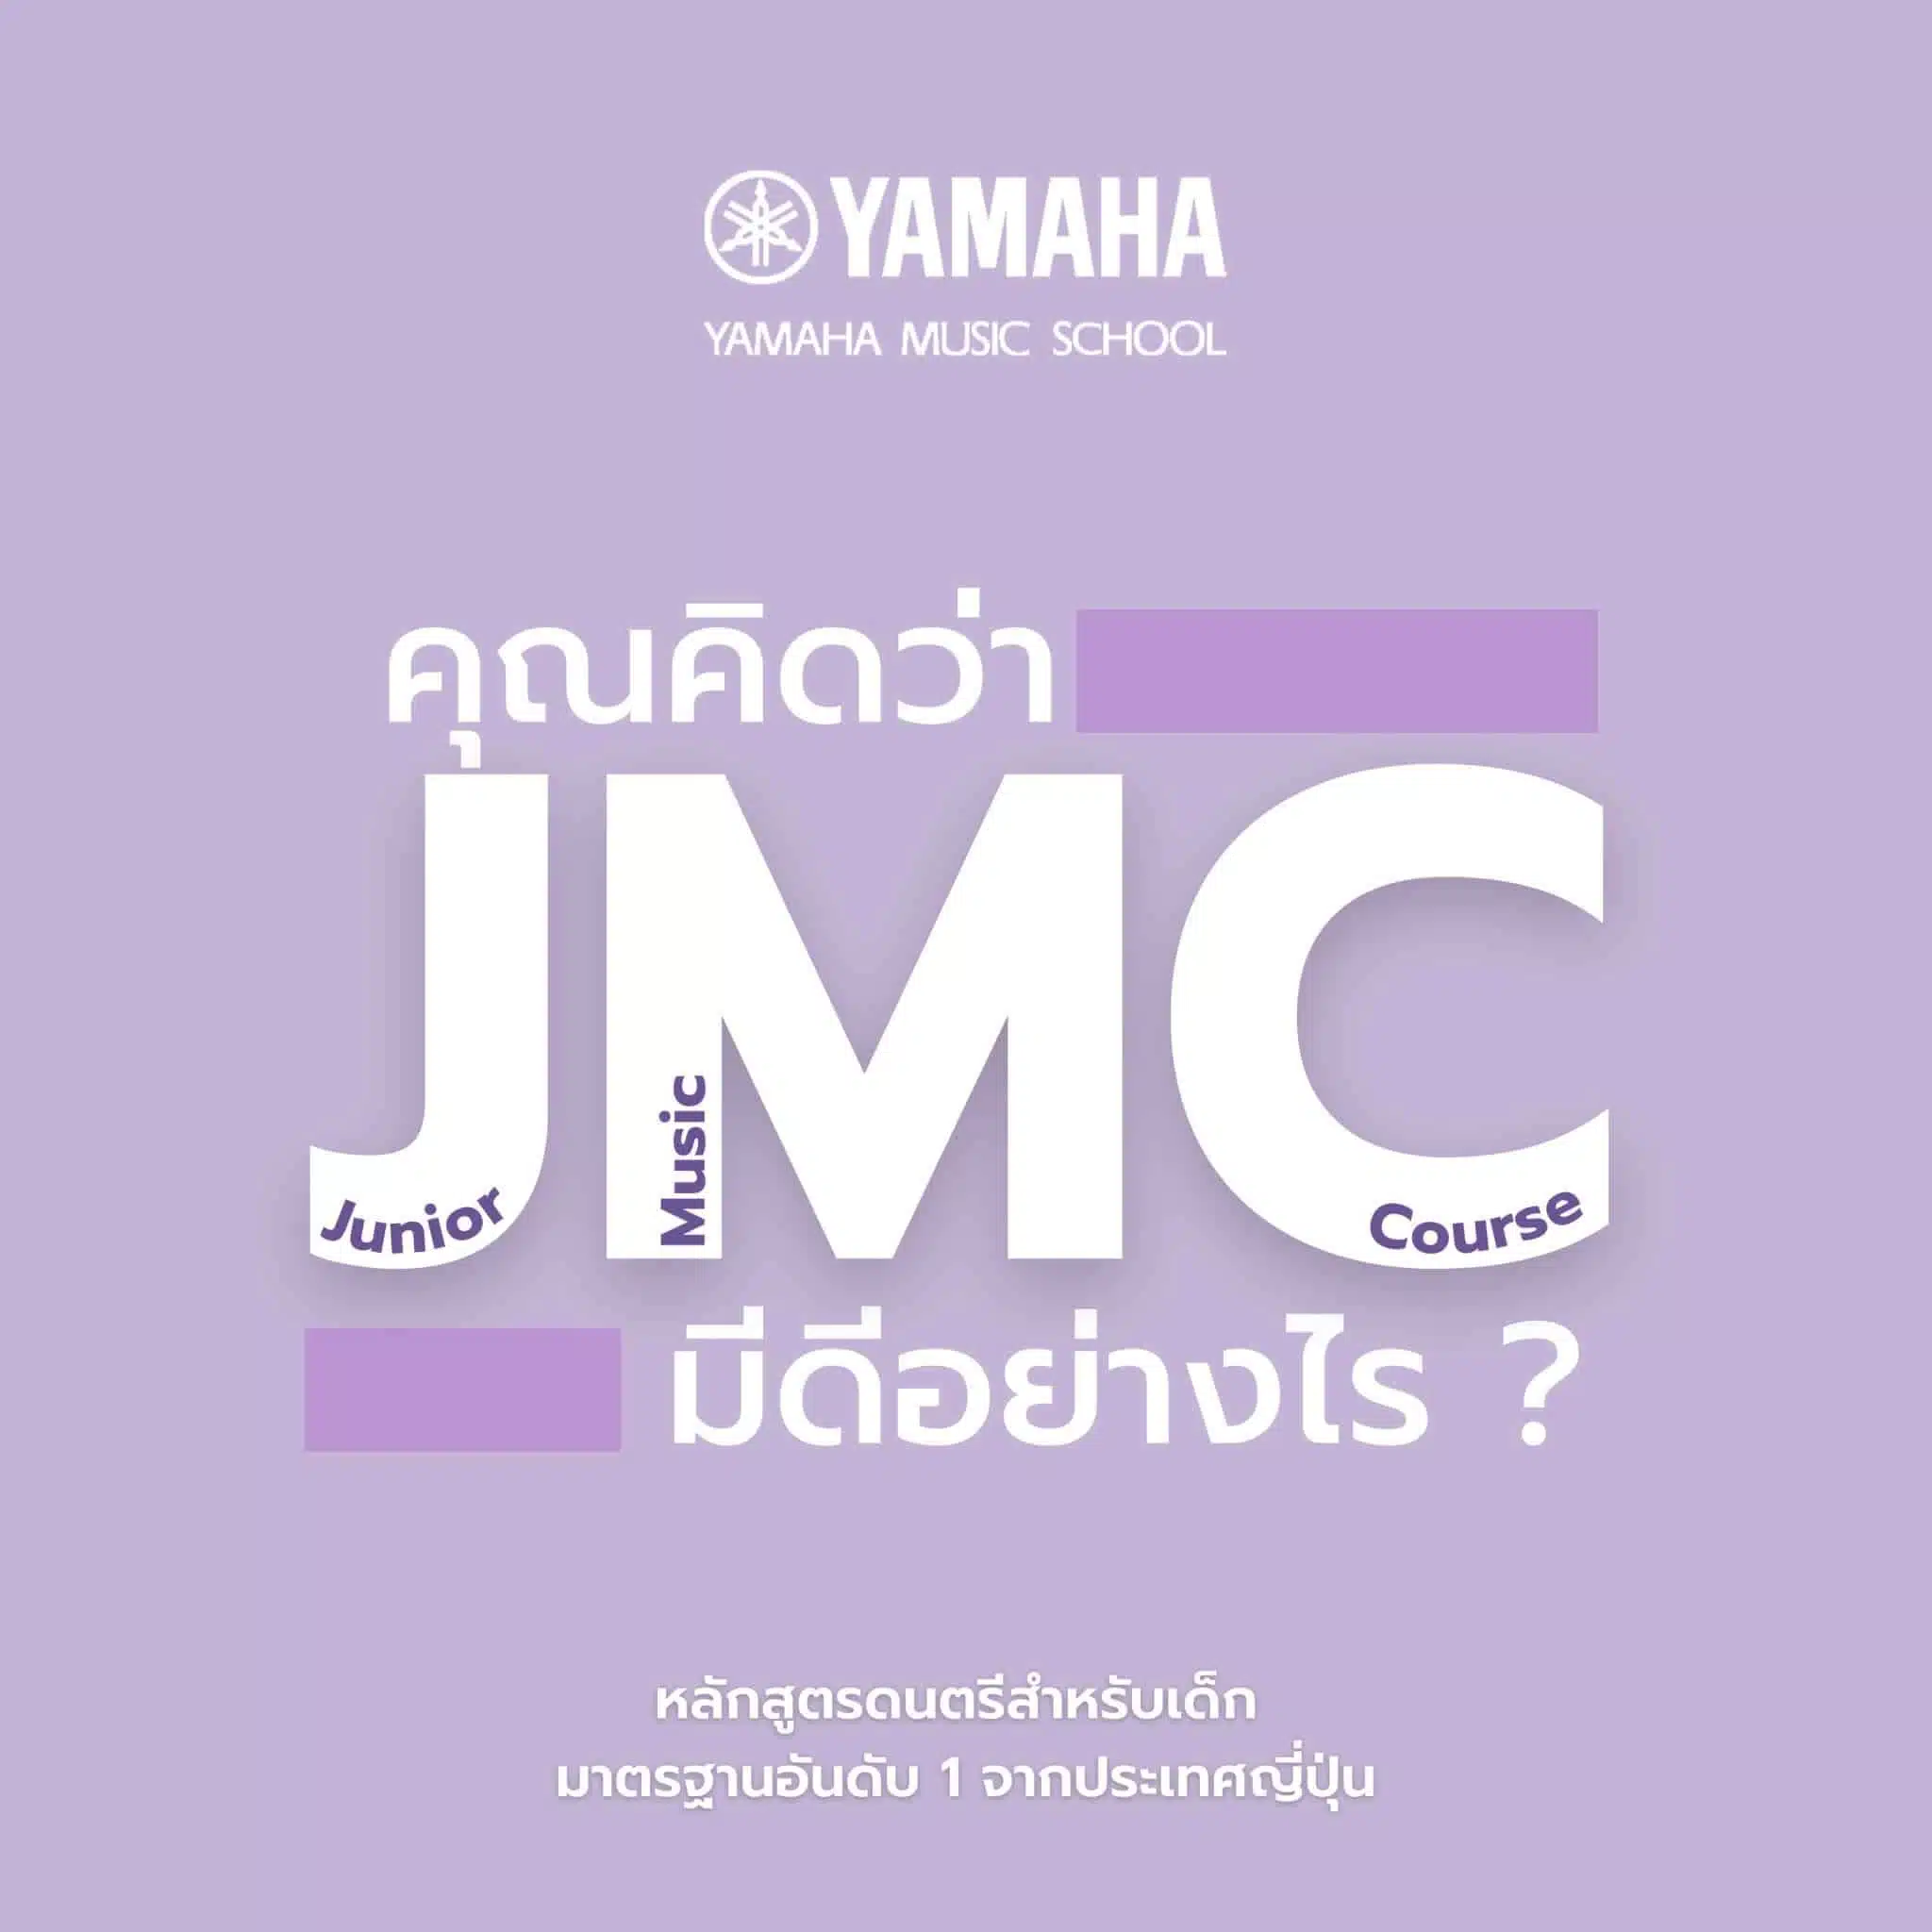 jmc - mustore